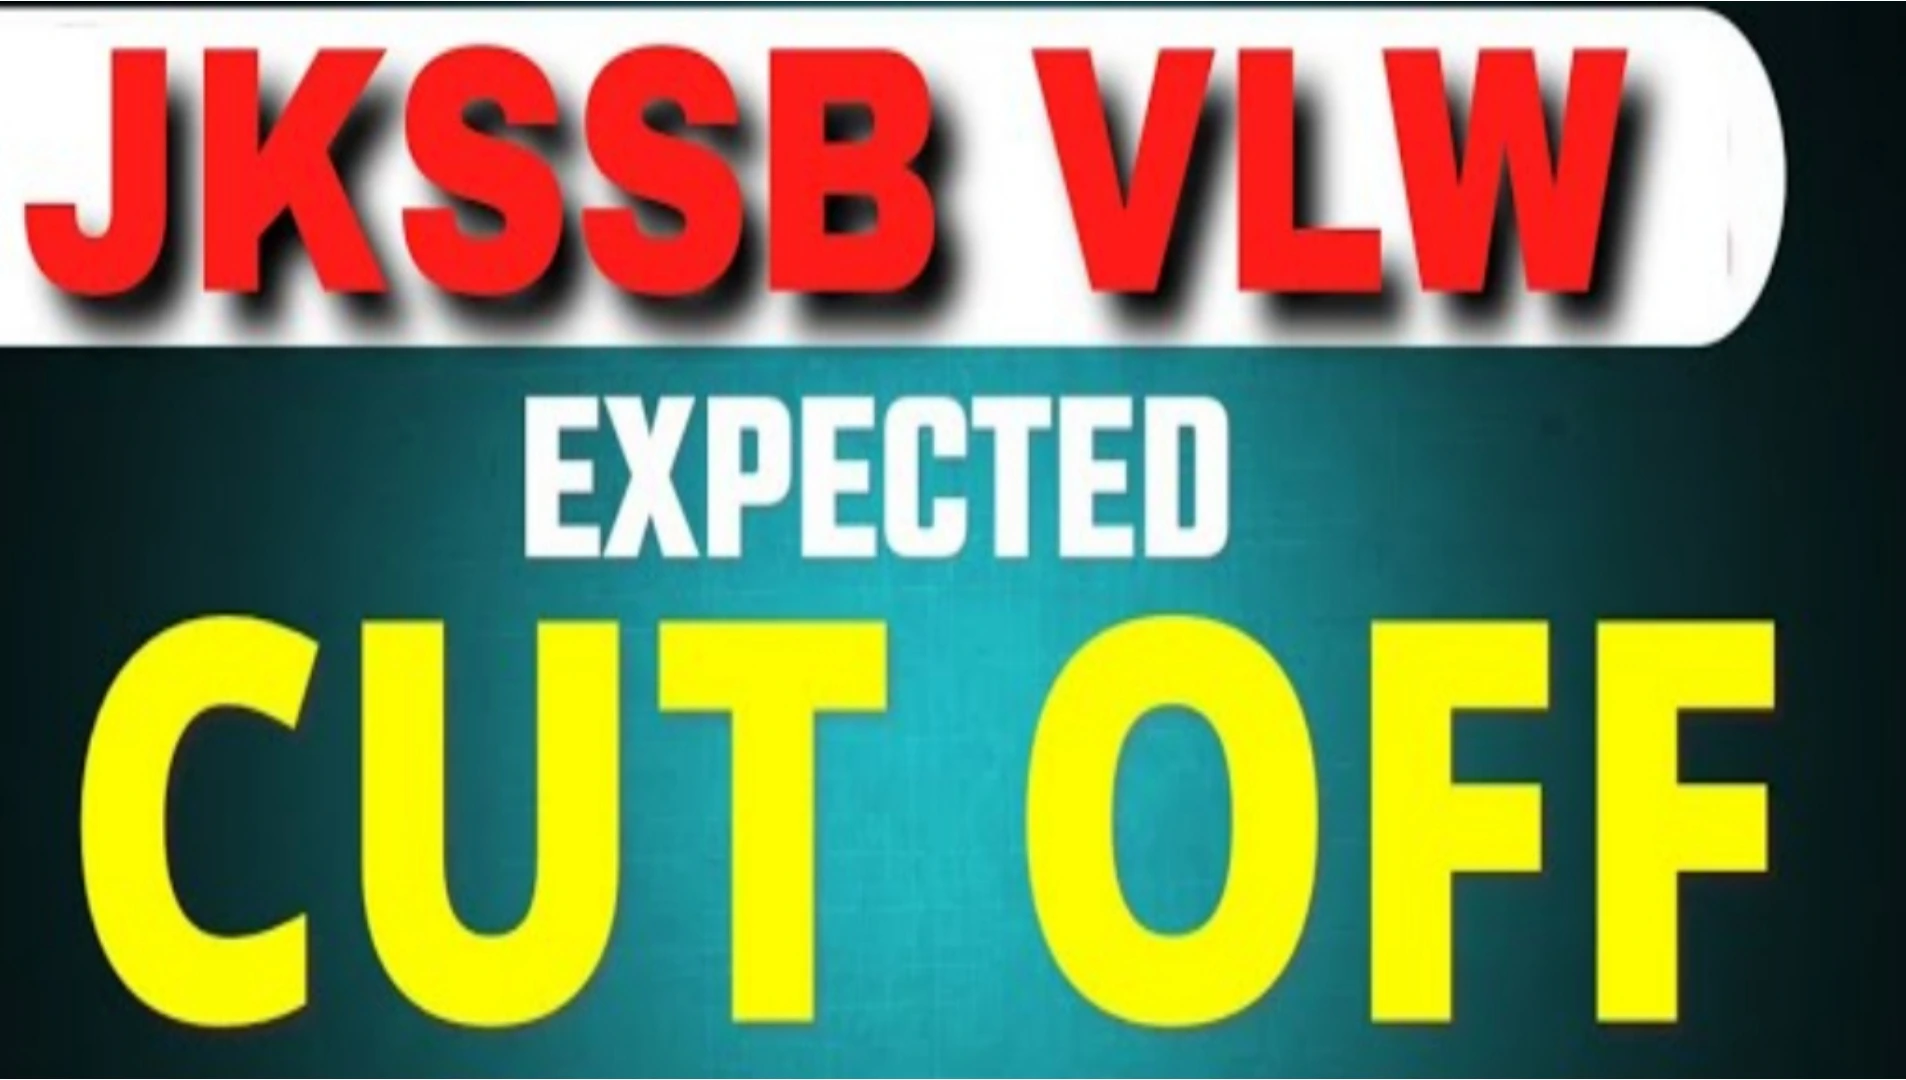 JKSSB VLW Expected Cutoff